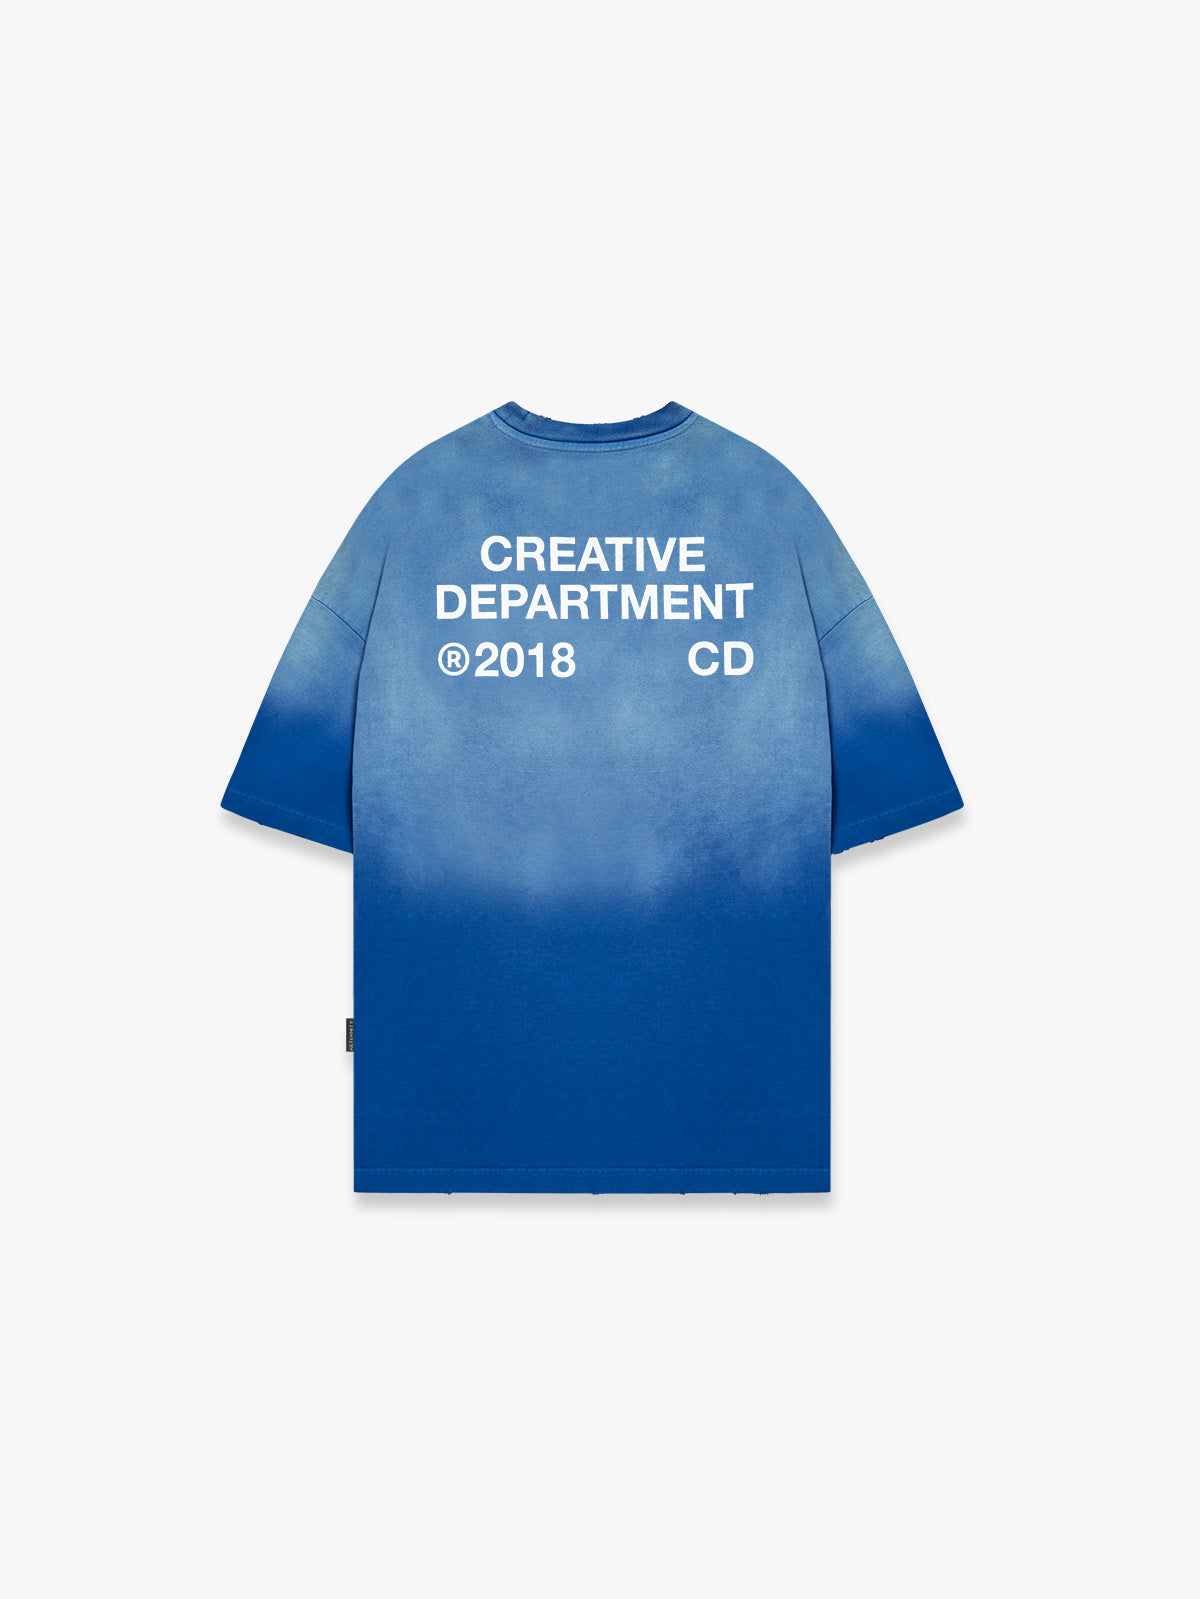 CREATIVE DEPT T-SHIRT - FADED BLUE